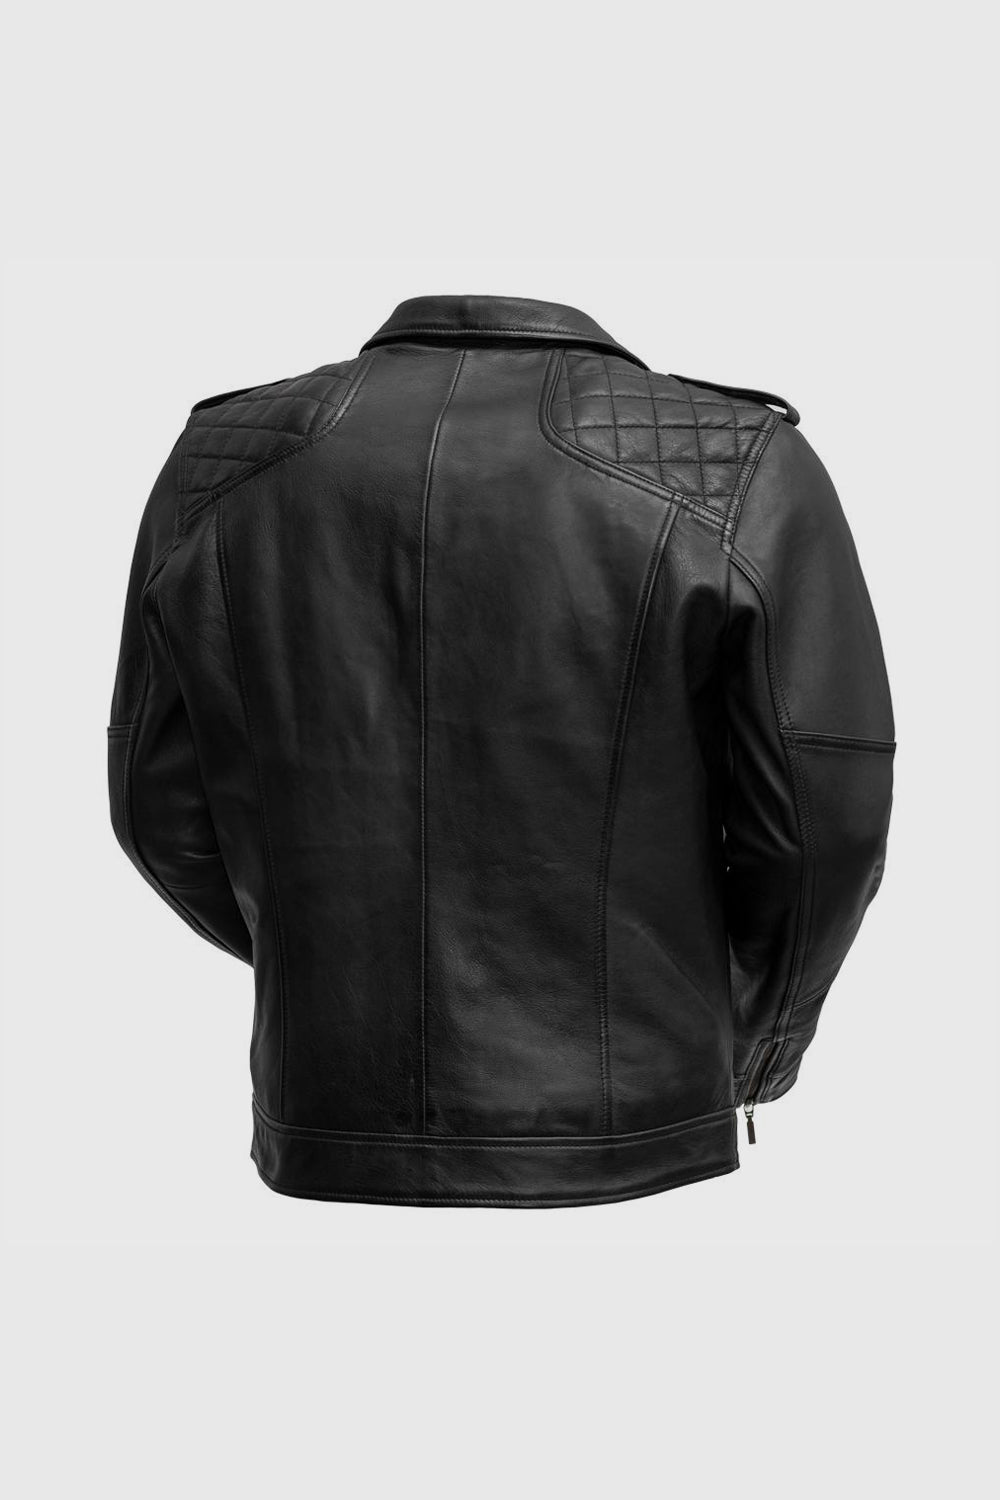 Gavin Mens Leather Jacket Men's Motorcycle style Jacket Whet Blu NYC   